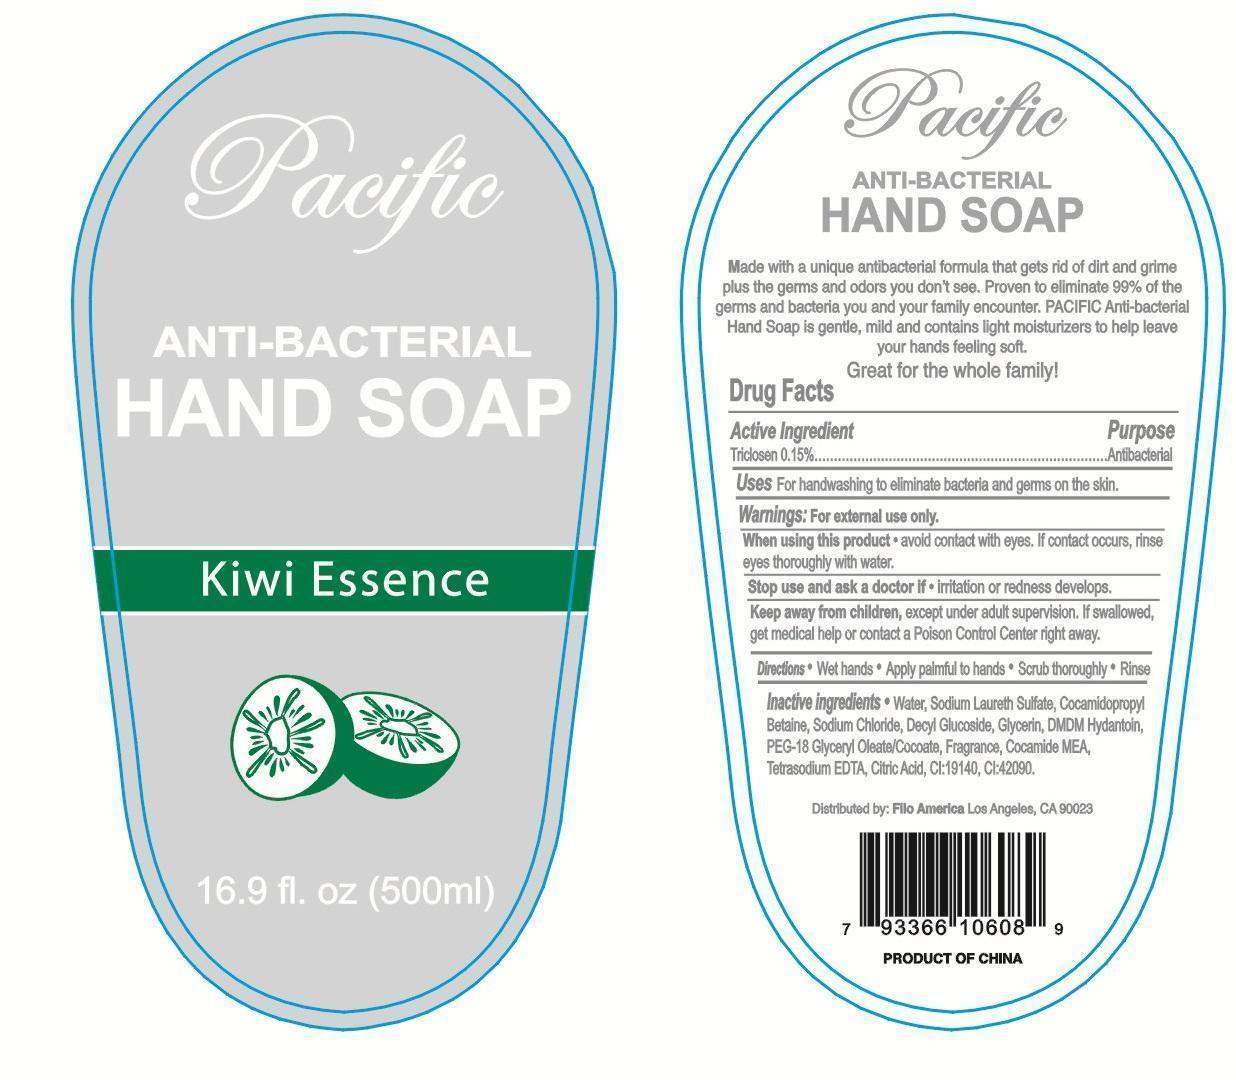 Pacific Anti-bacterial Hand Cleanse Kiwi Essence | Triclosan Gel Breastfeeding